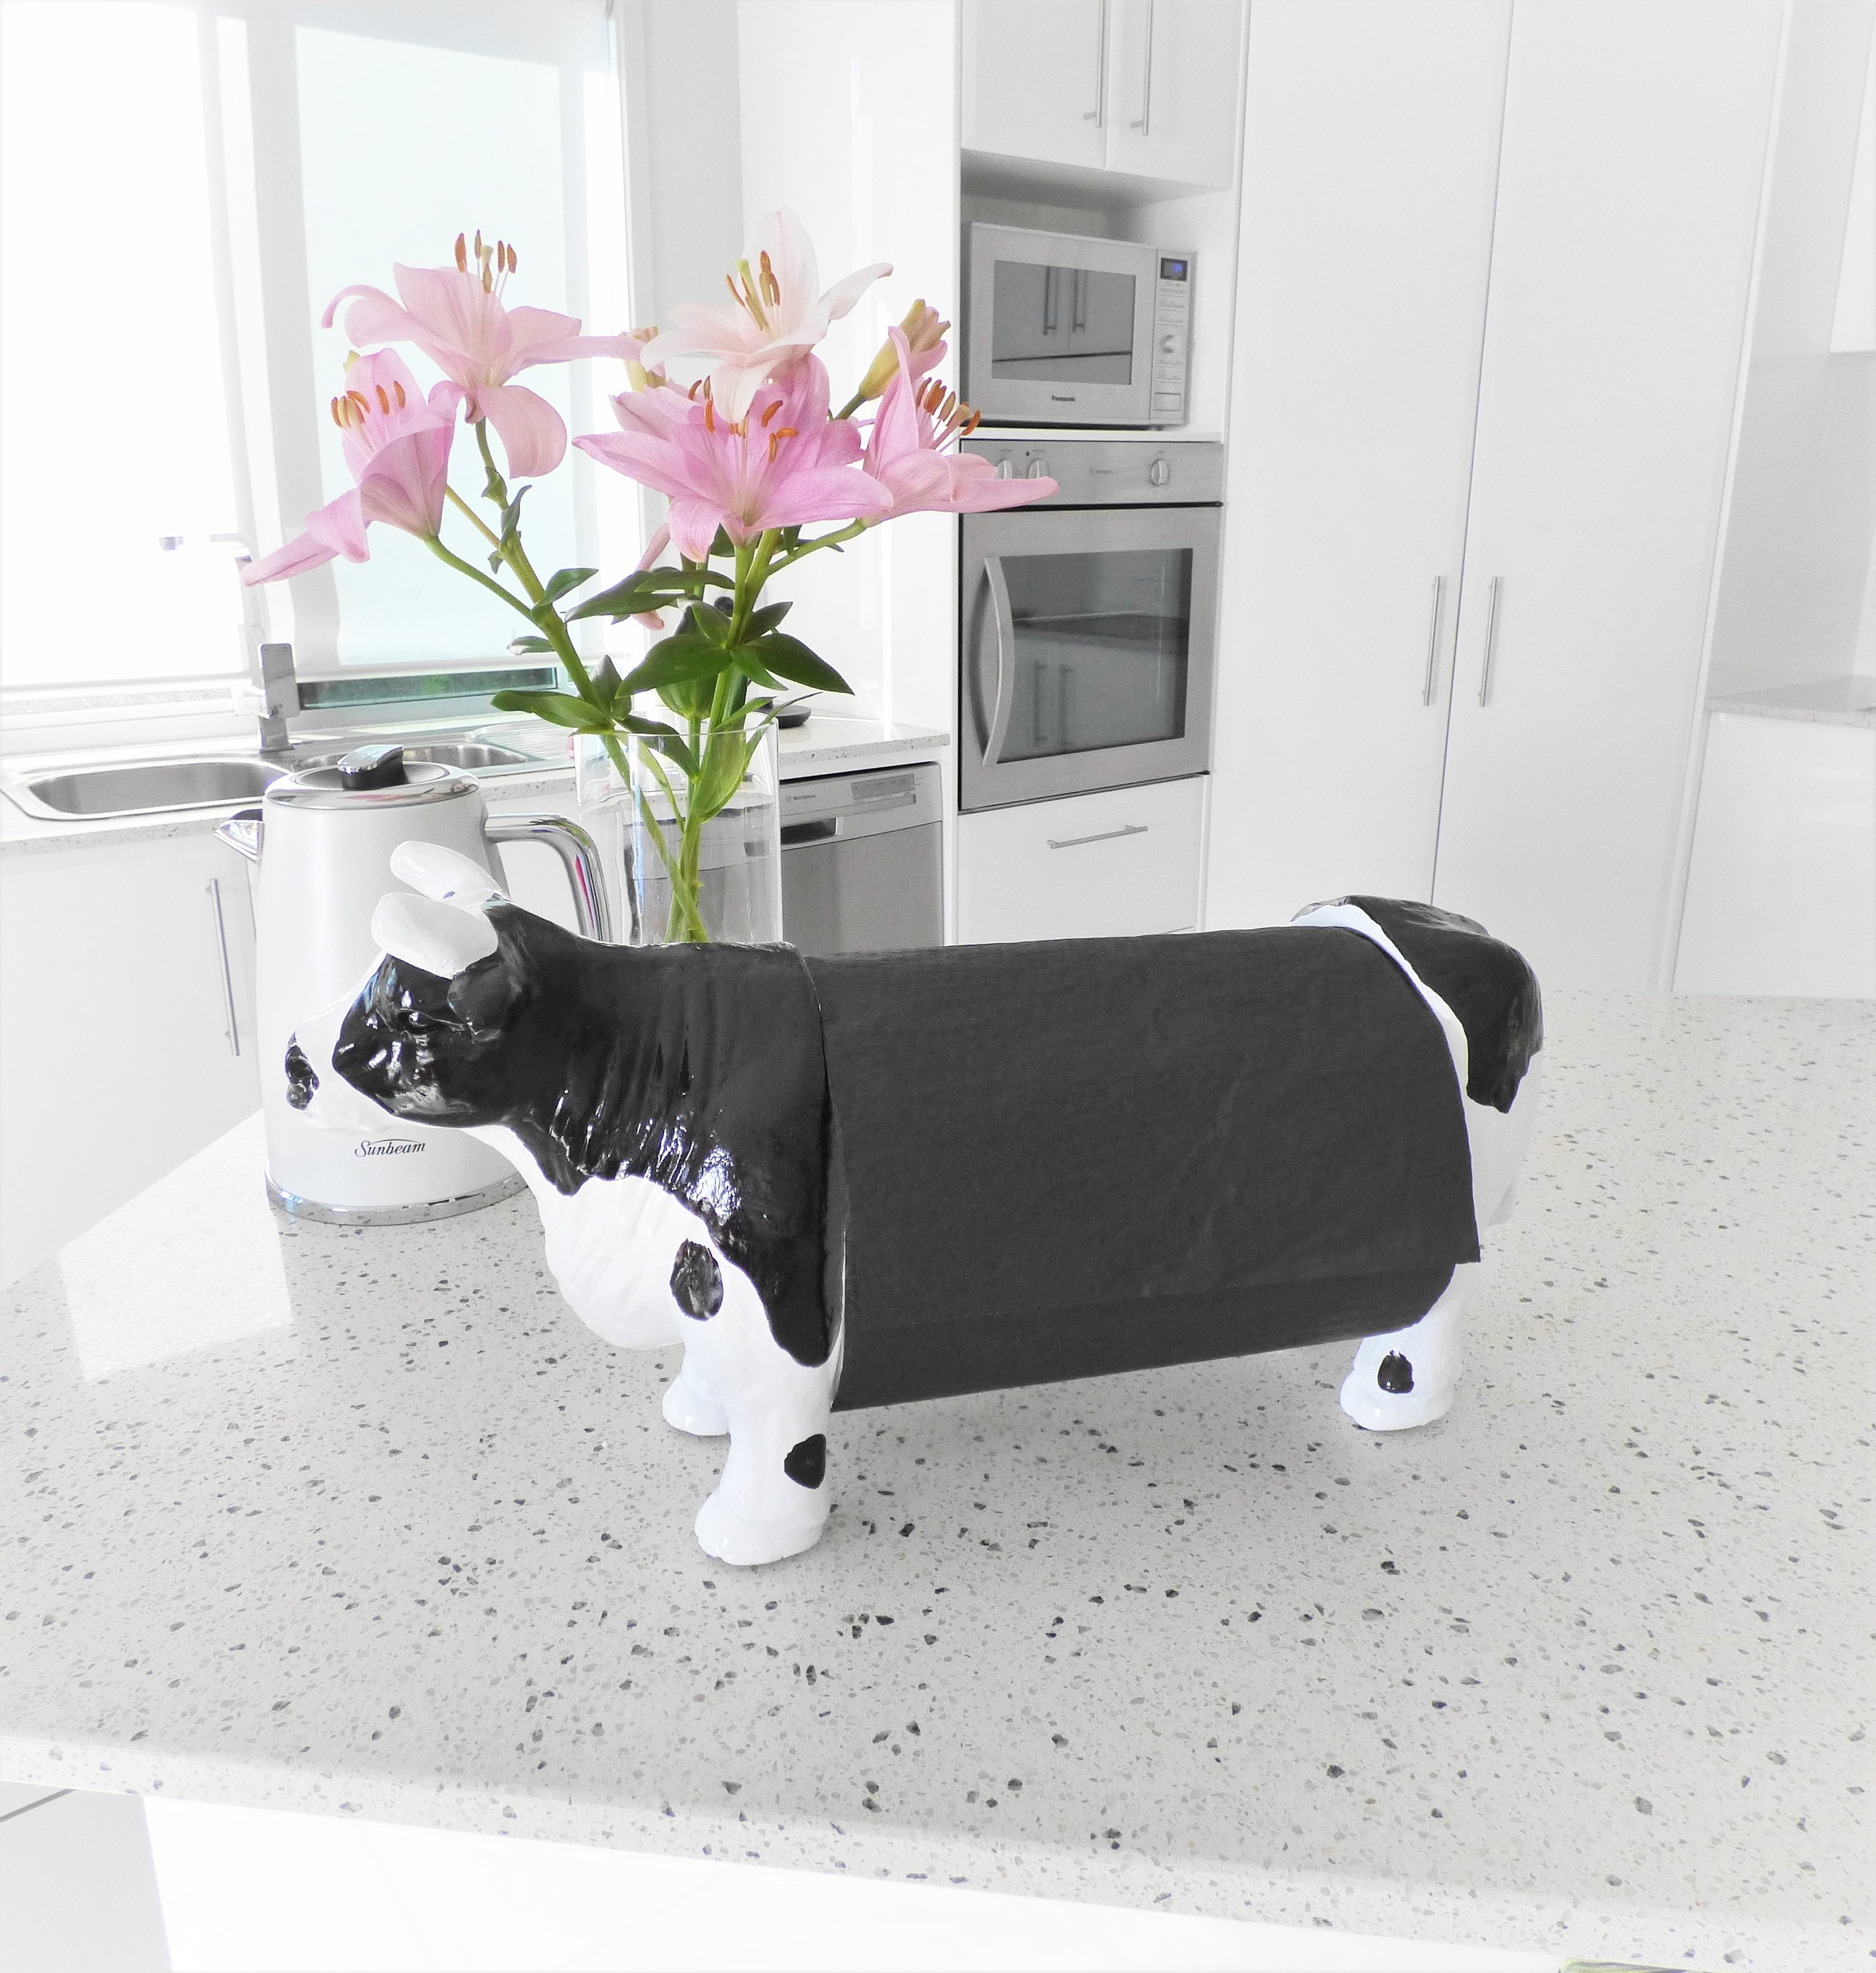 Cow decor paper towel holder